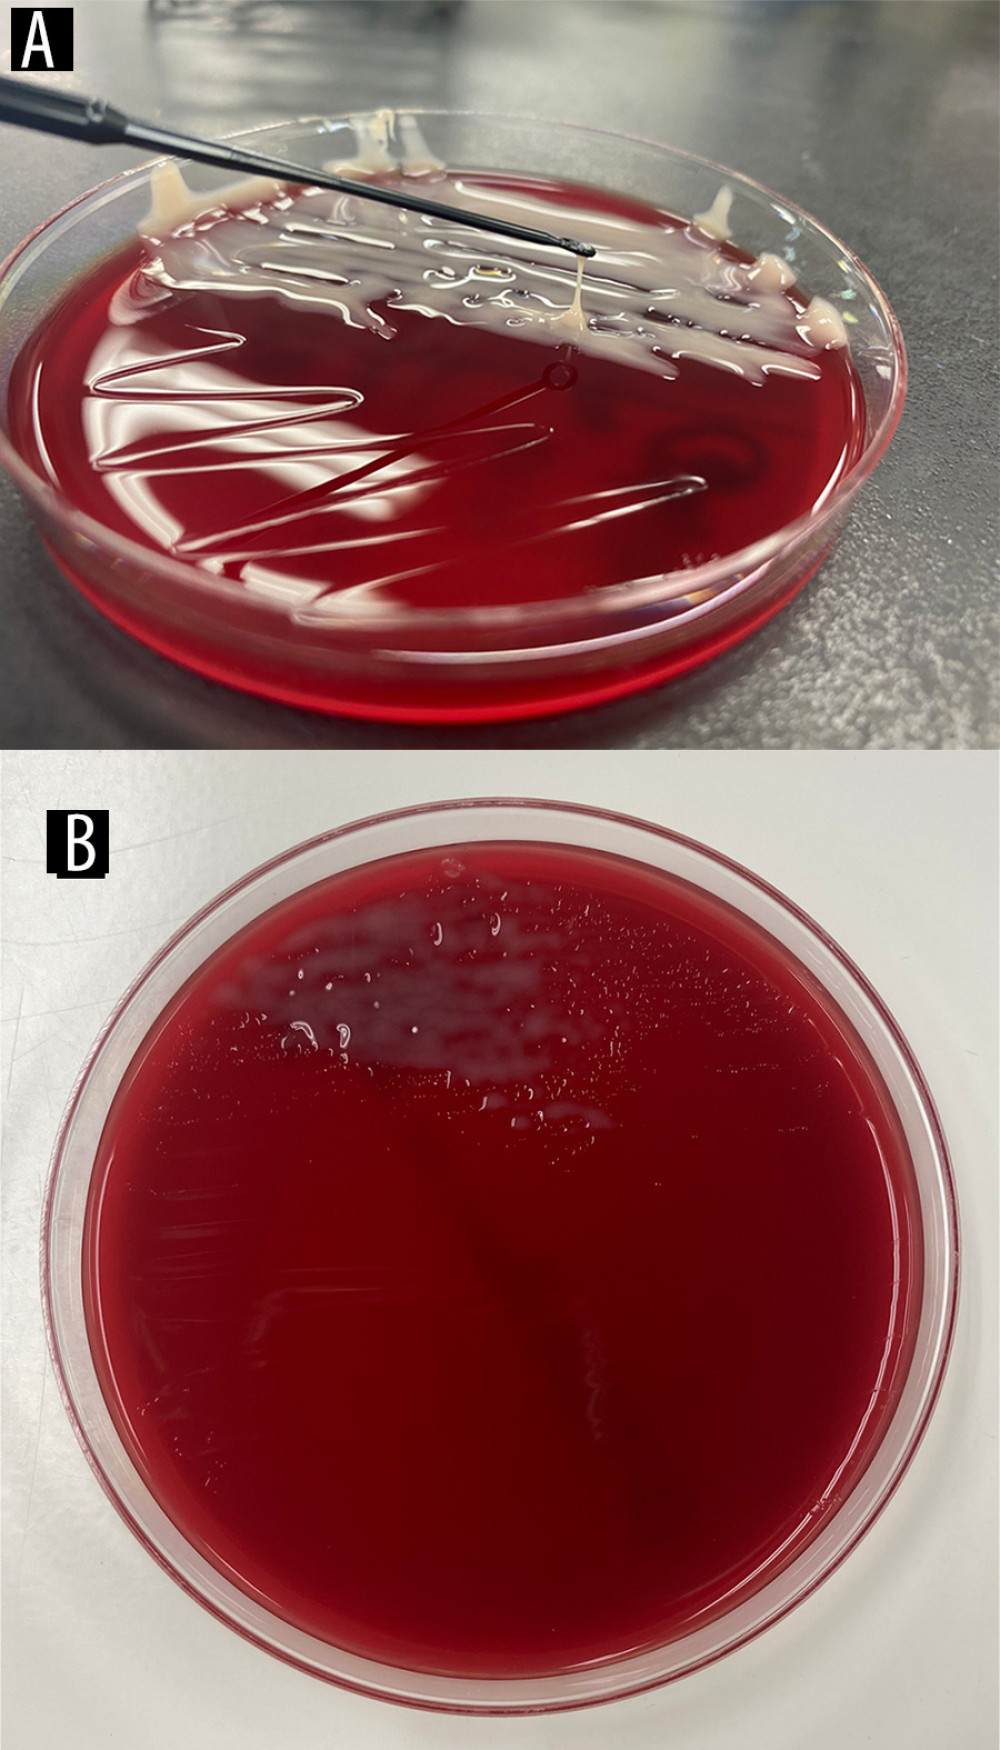 Mucoid-typeS. maltophilia colony. String-positive (A), S. maltophilia on blood agar (B).